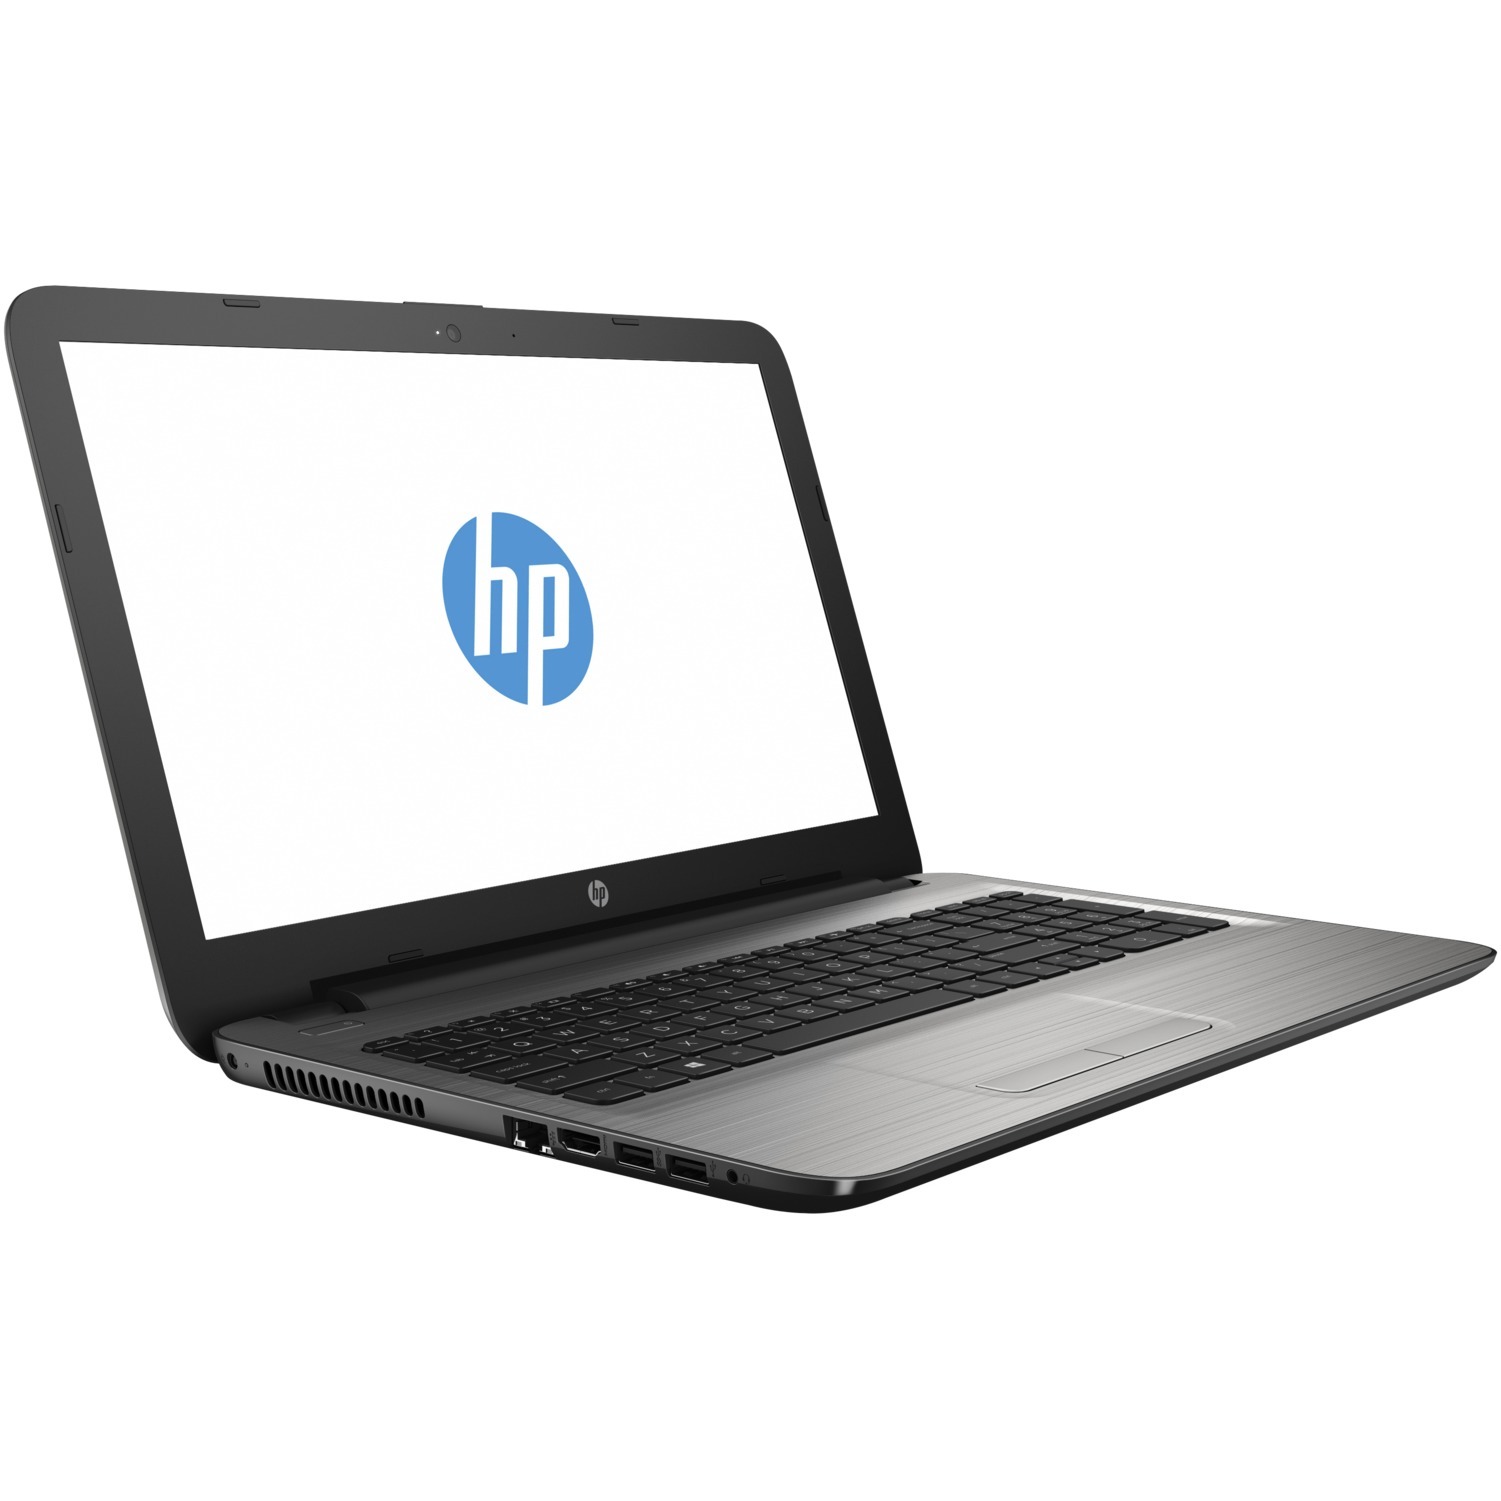 HP 15-ay039wm 15.6" Silver Fusion Laptop, Windows 10, Intel Core i3-6100U Processor, 8GB Memory, 1TB Hard Drive - image 3 of 5